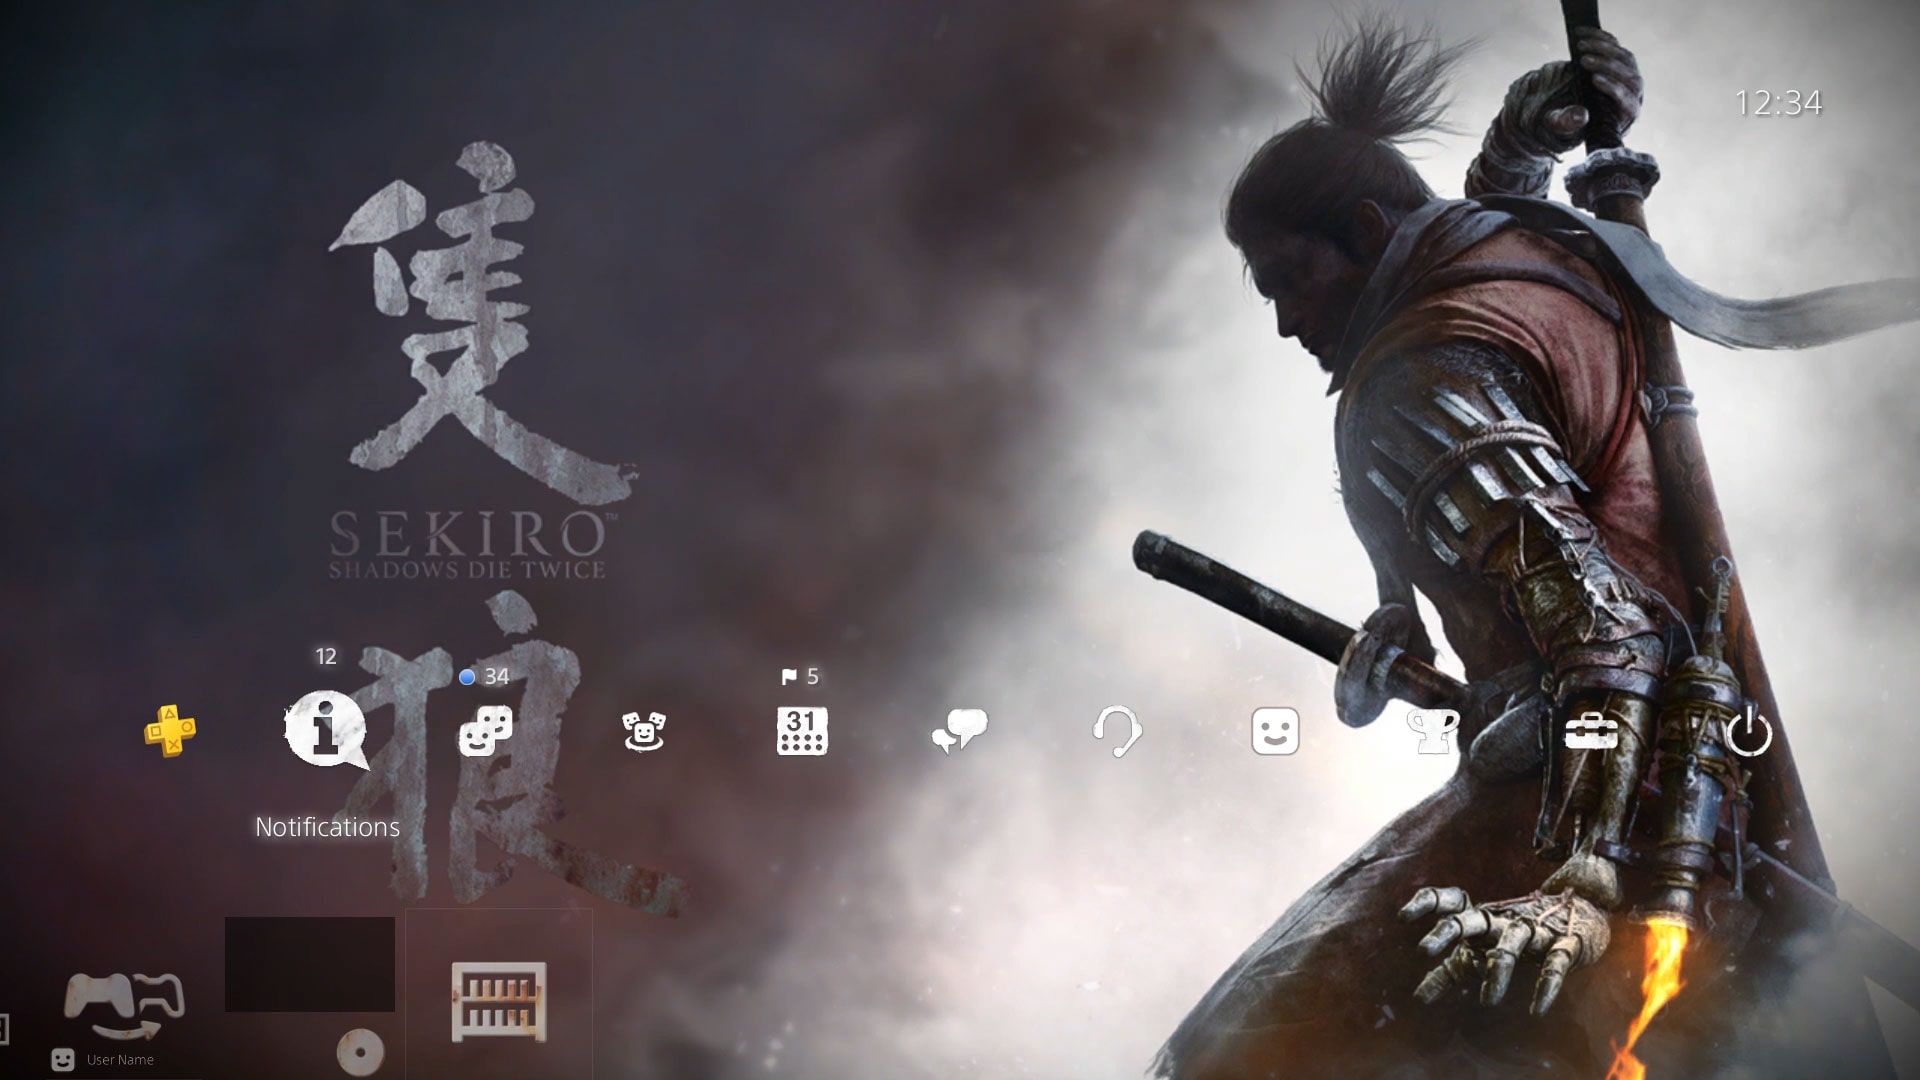 NPtnNhNb Sekiro Launch PS4 Theme Screenshot 01 1920x1080 